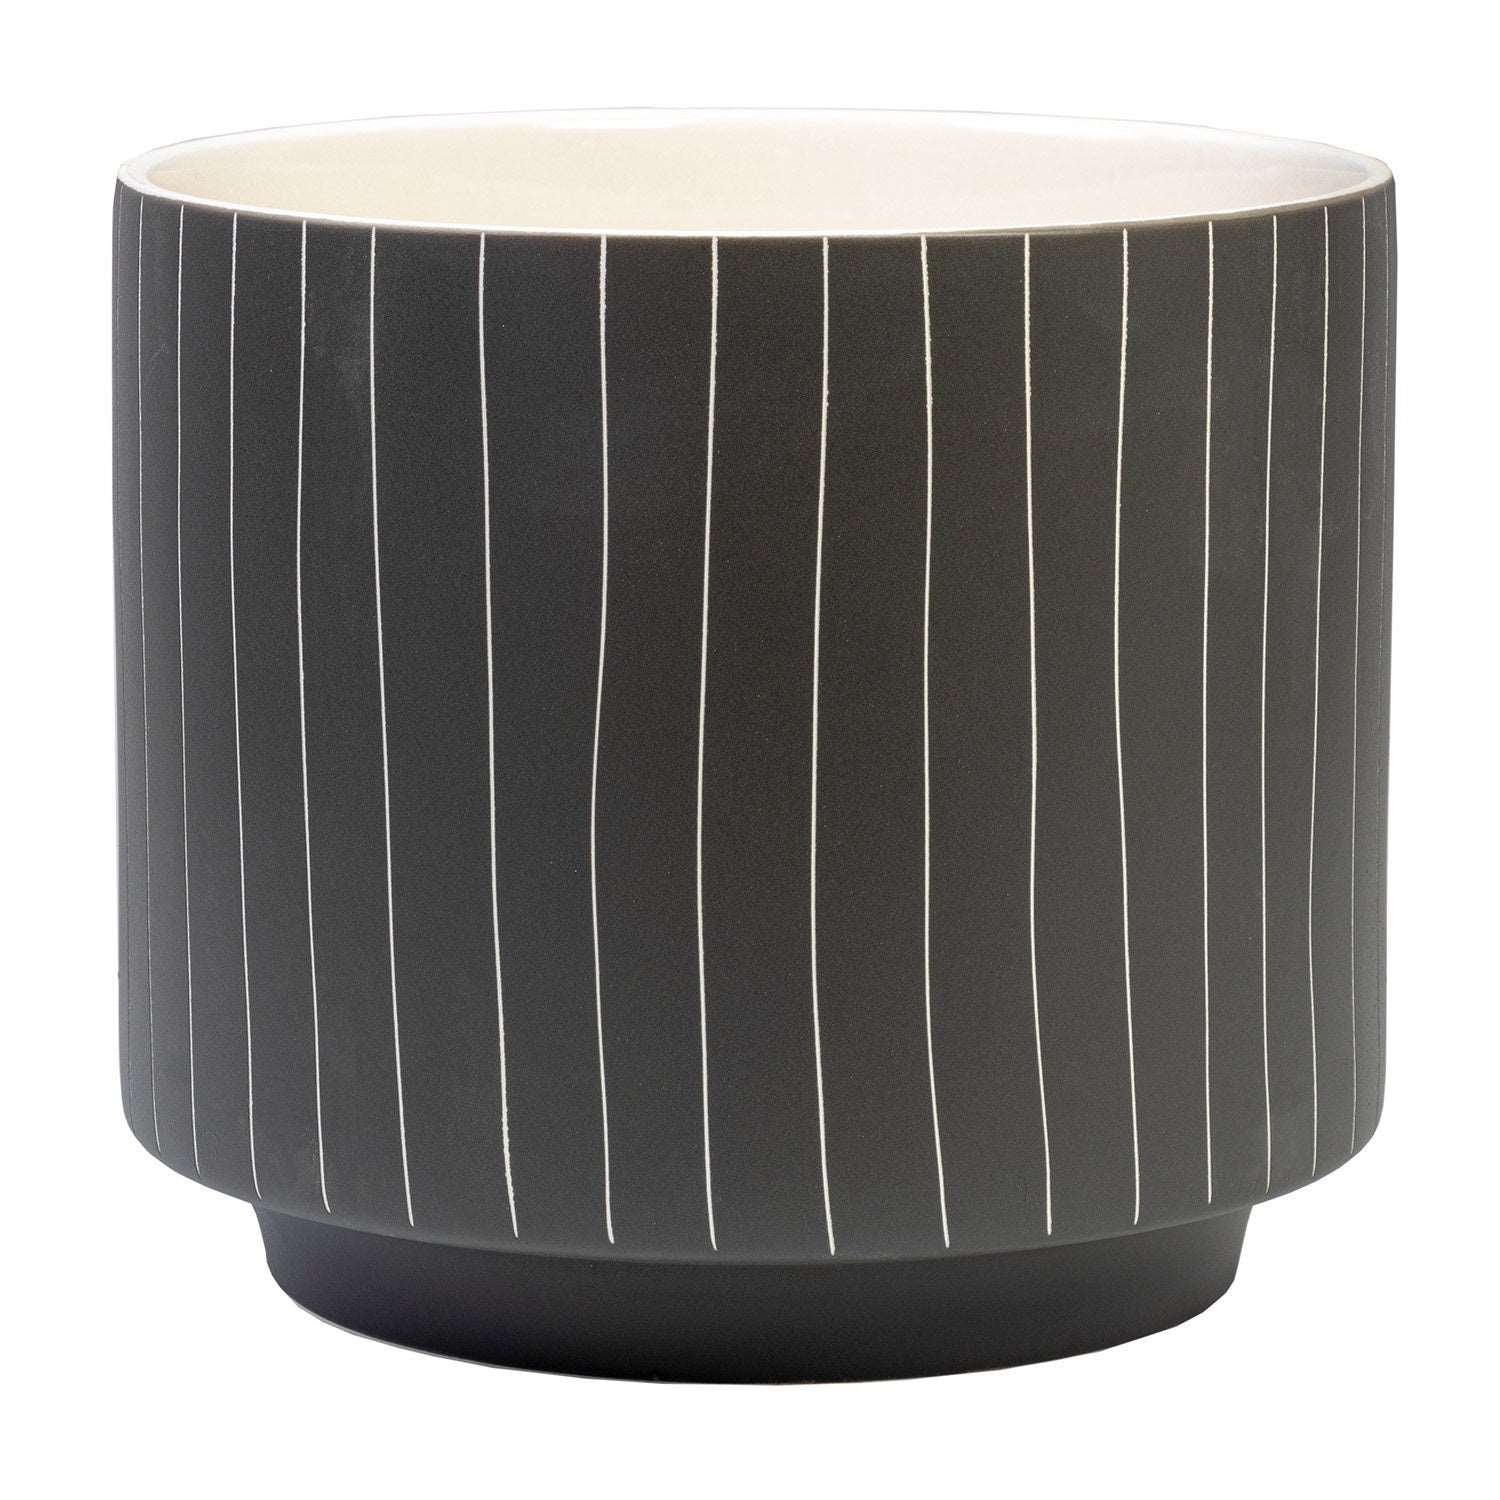 Blurred Lines Dark Grey Pot - Large